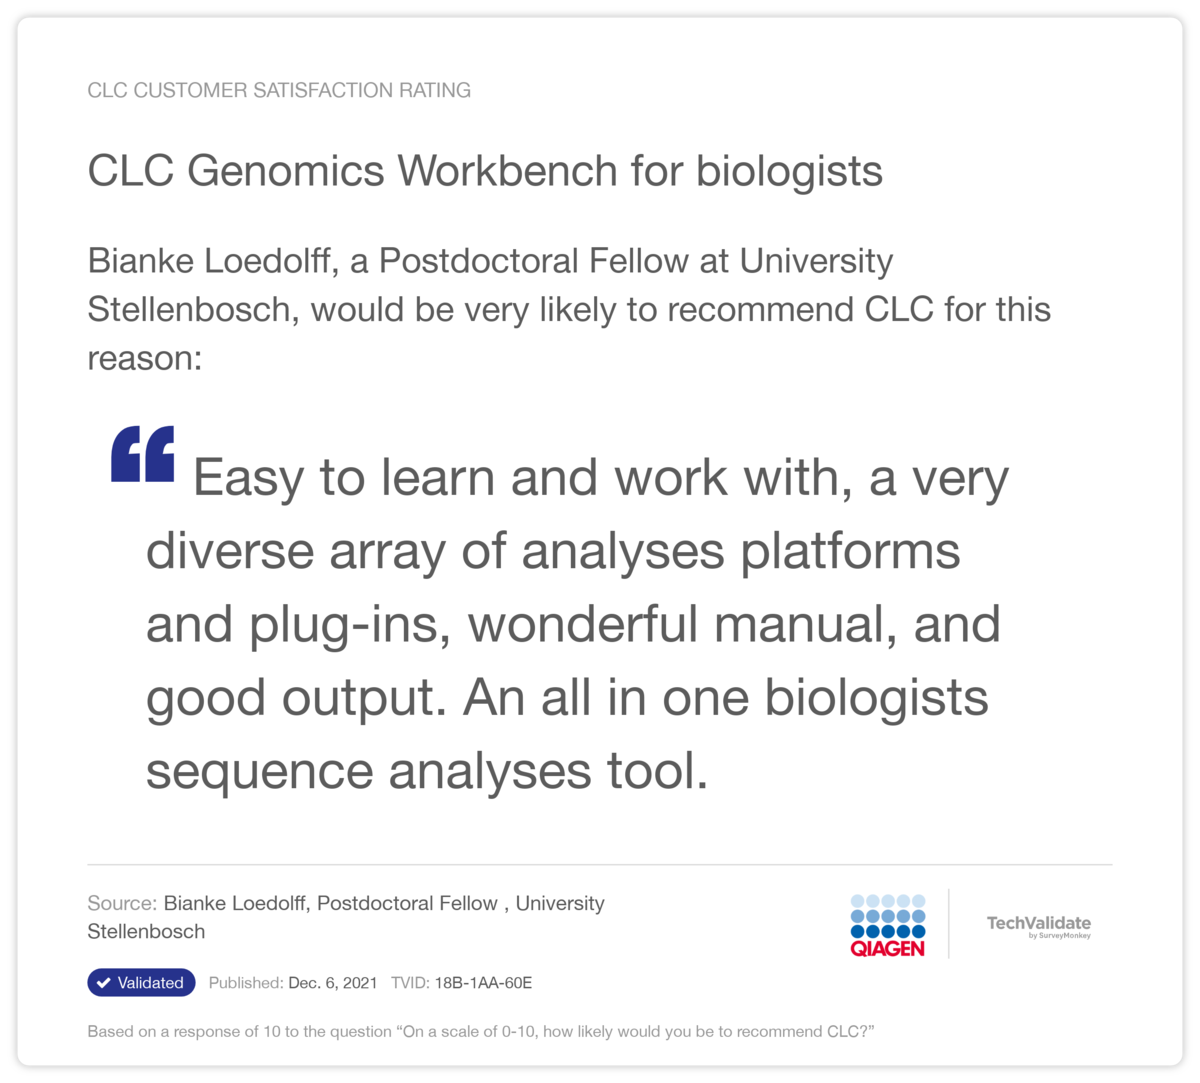 CLC Genomics Workbench for biologists